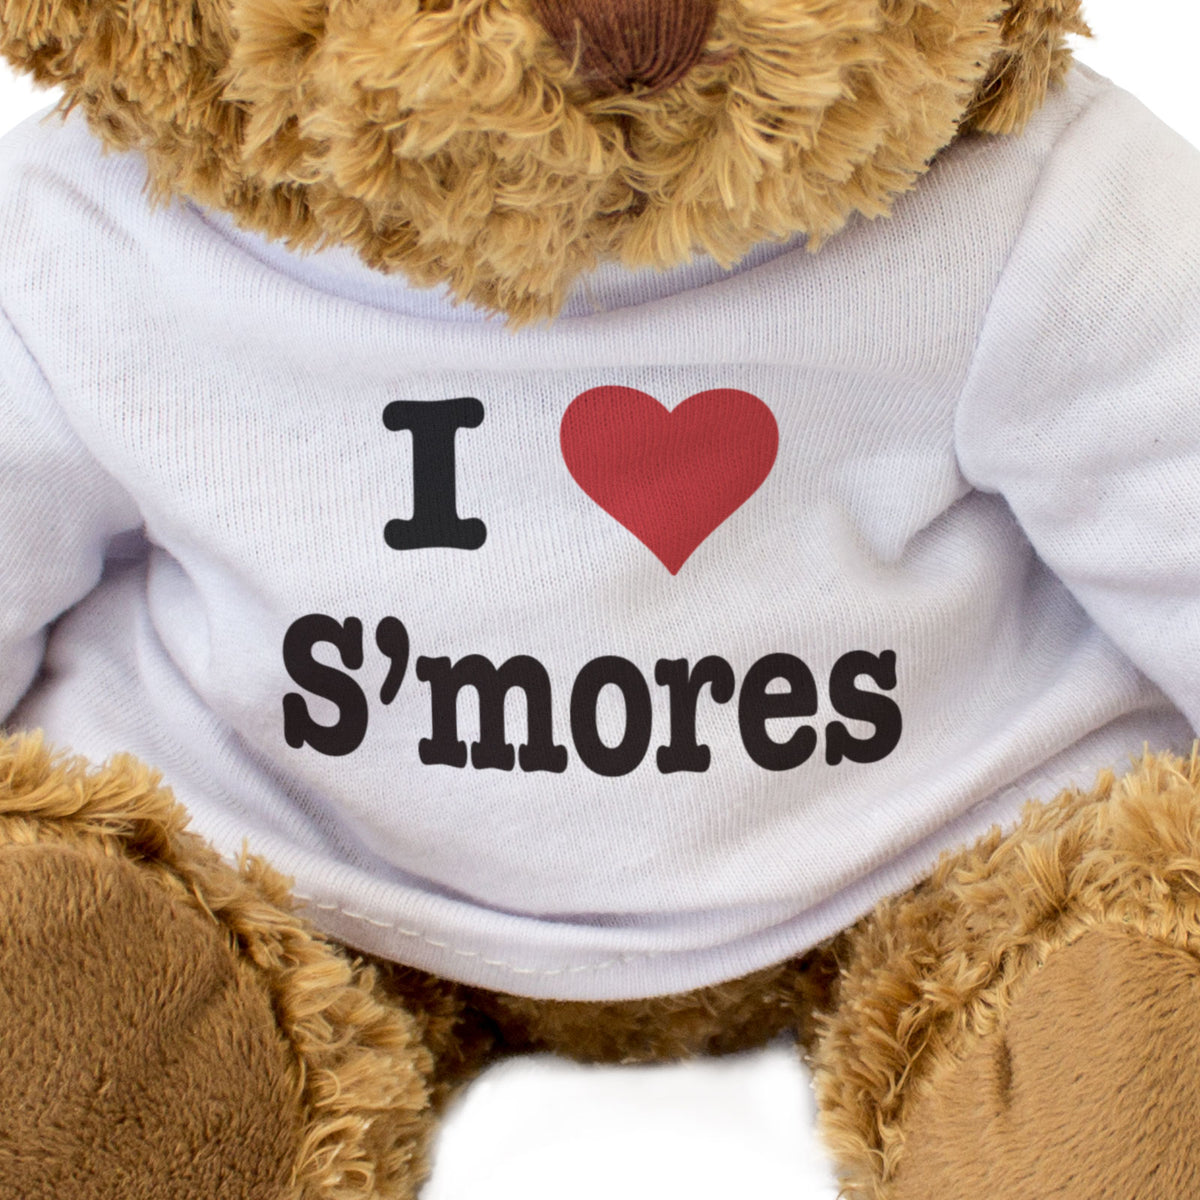 I Love S'mores - Teddy Bear